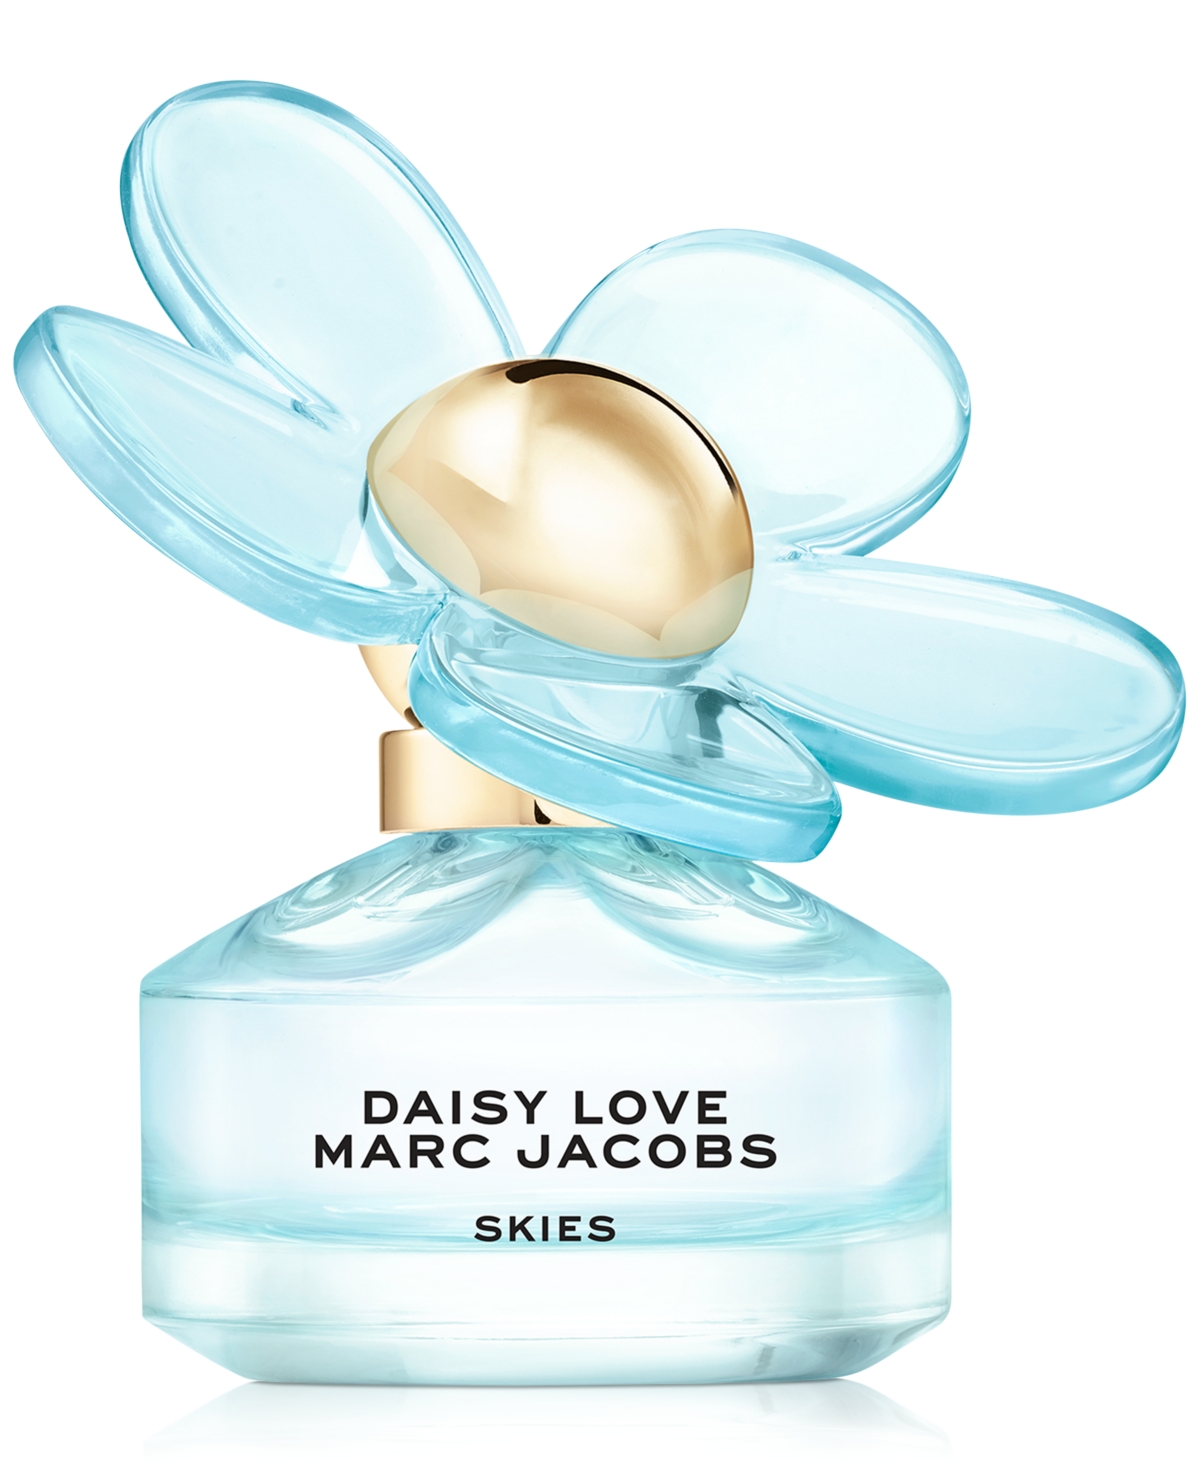 Marc Jacobs Daisy Love Skies Eau de Toilette Spray, 1.6 oz.